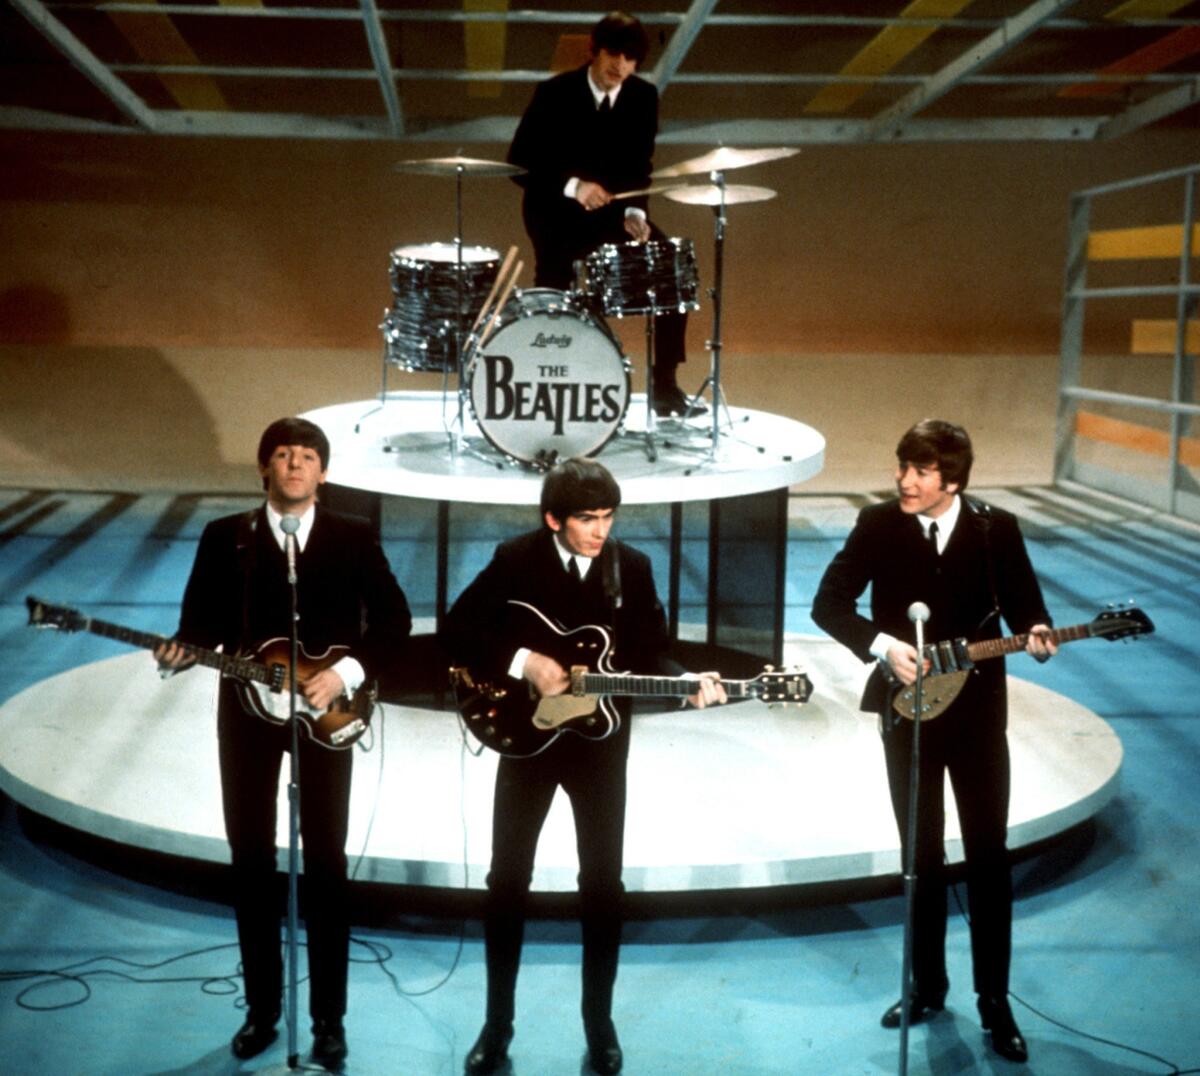 The Beatles perform on CBS' "The Ed Sullivan Show" in New York on Feb. 9, 1964.